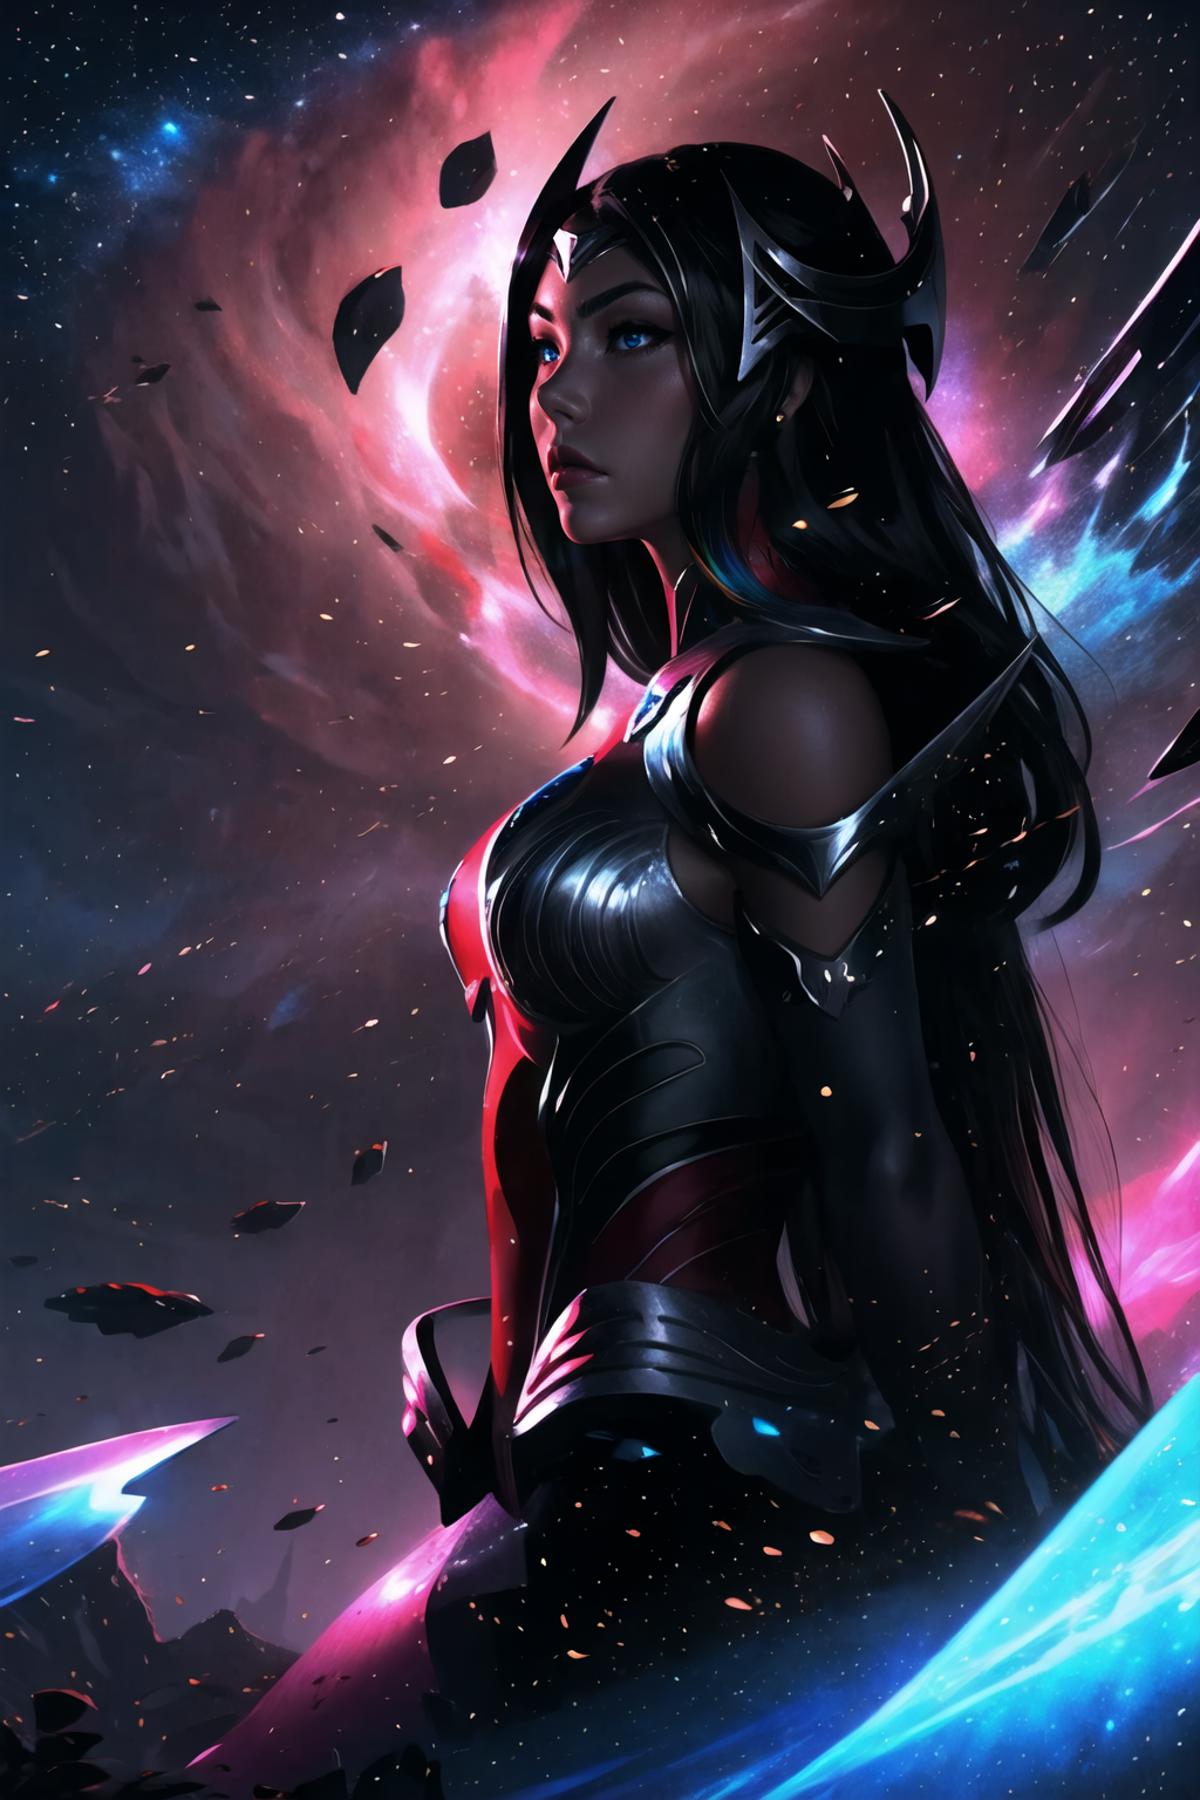 Irelia the Blade Dancer | League of Legends | LoRa image by FallenIncursio